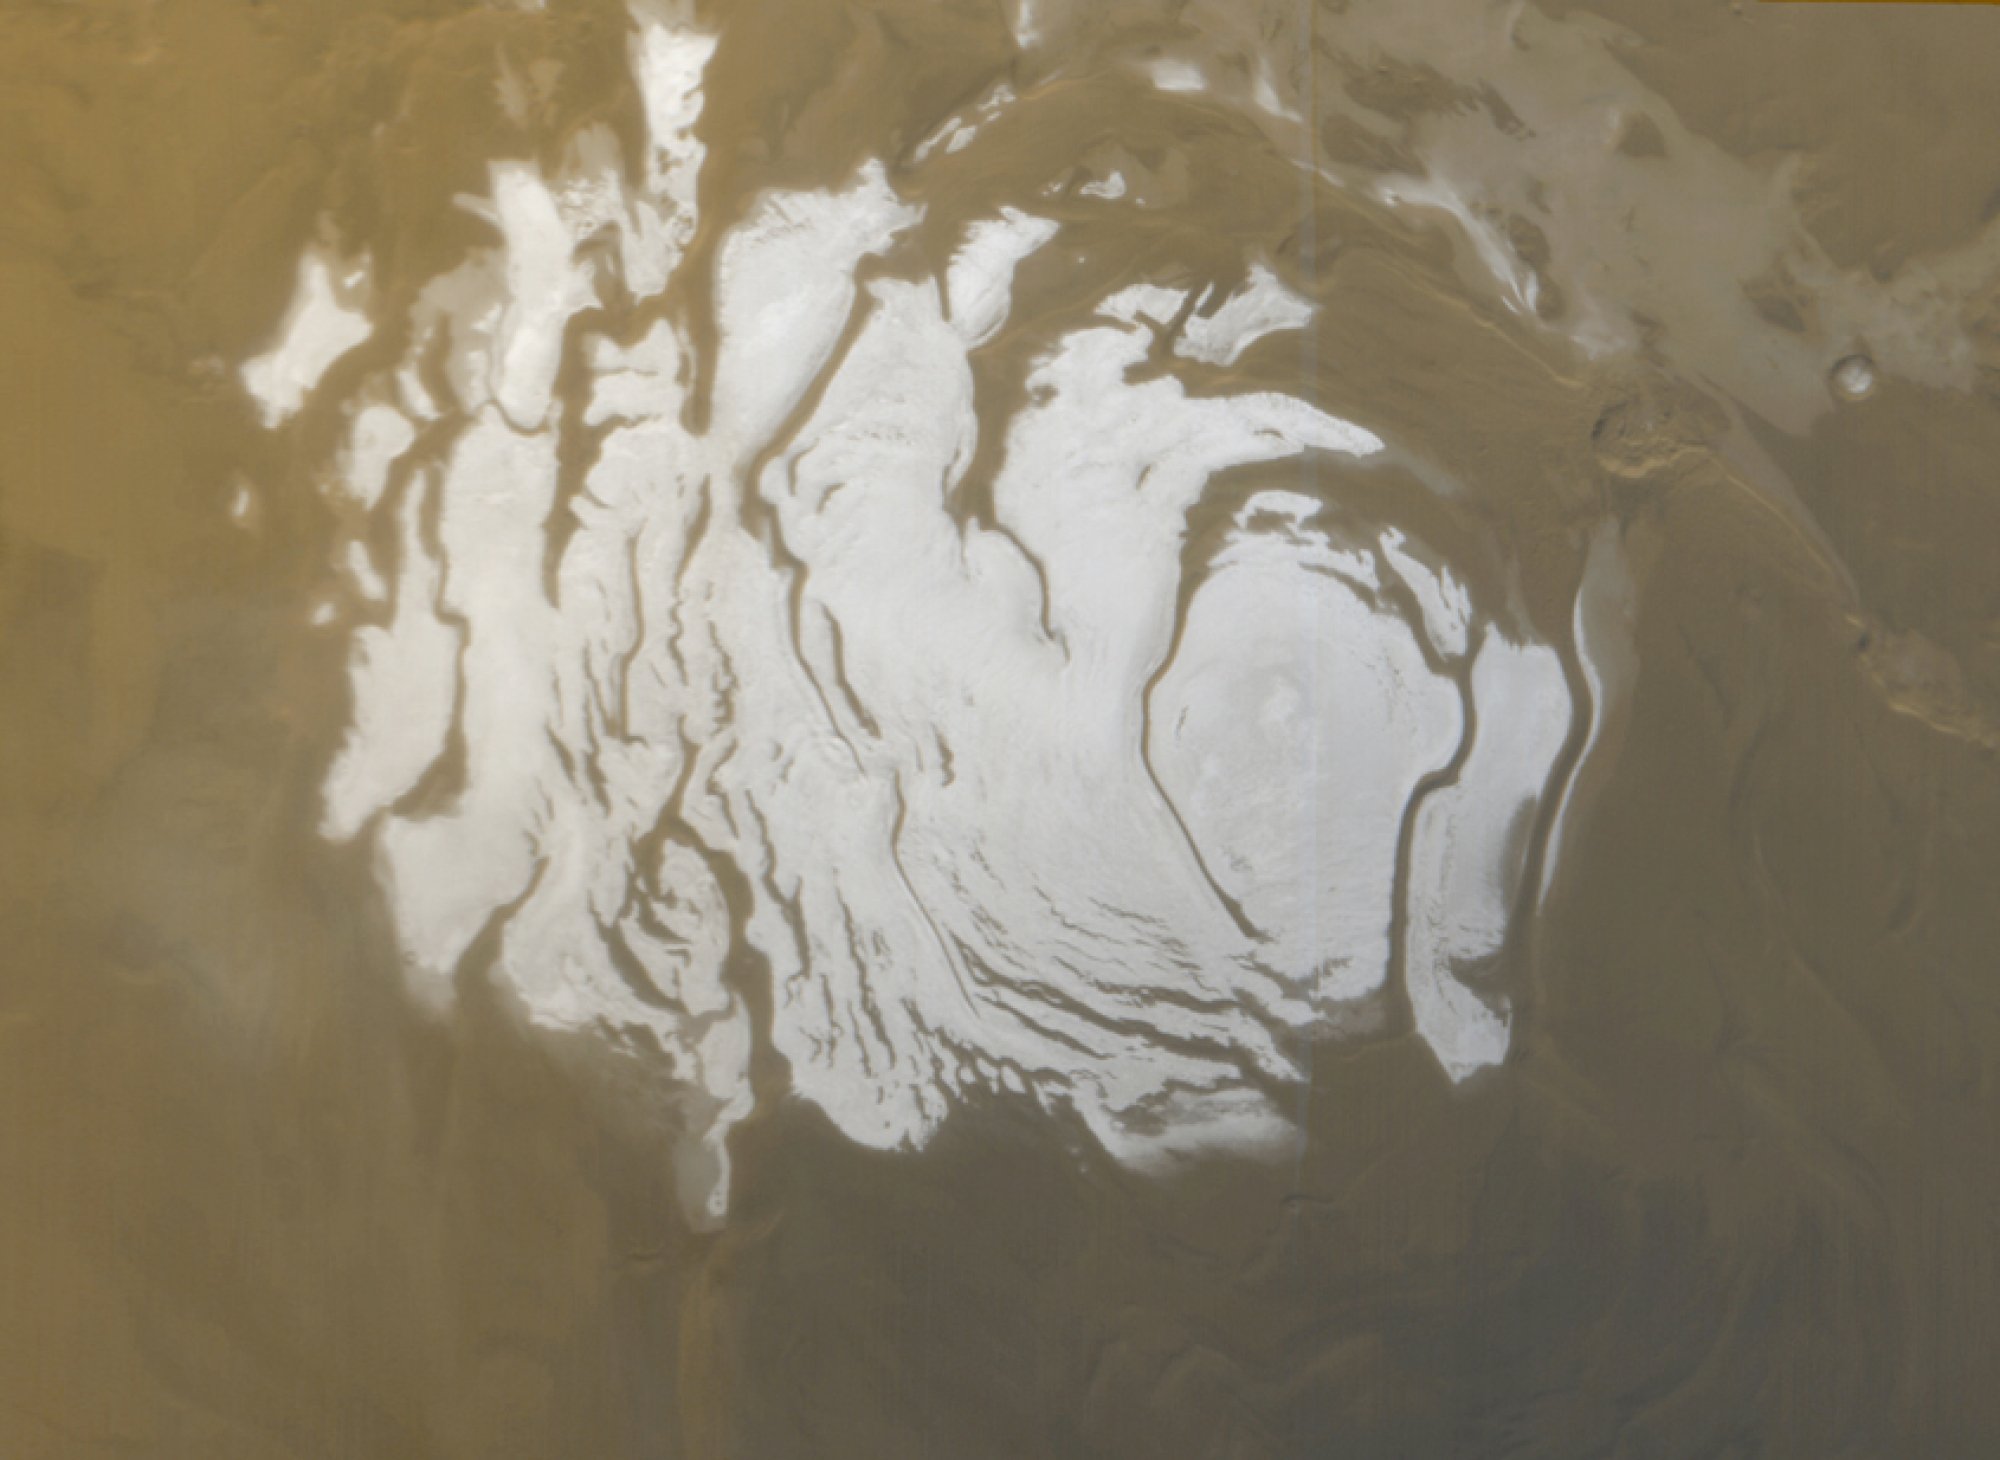 Mars Orbiter studying south polar ice cap